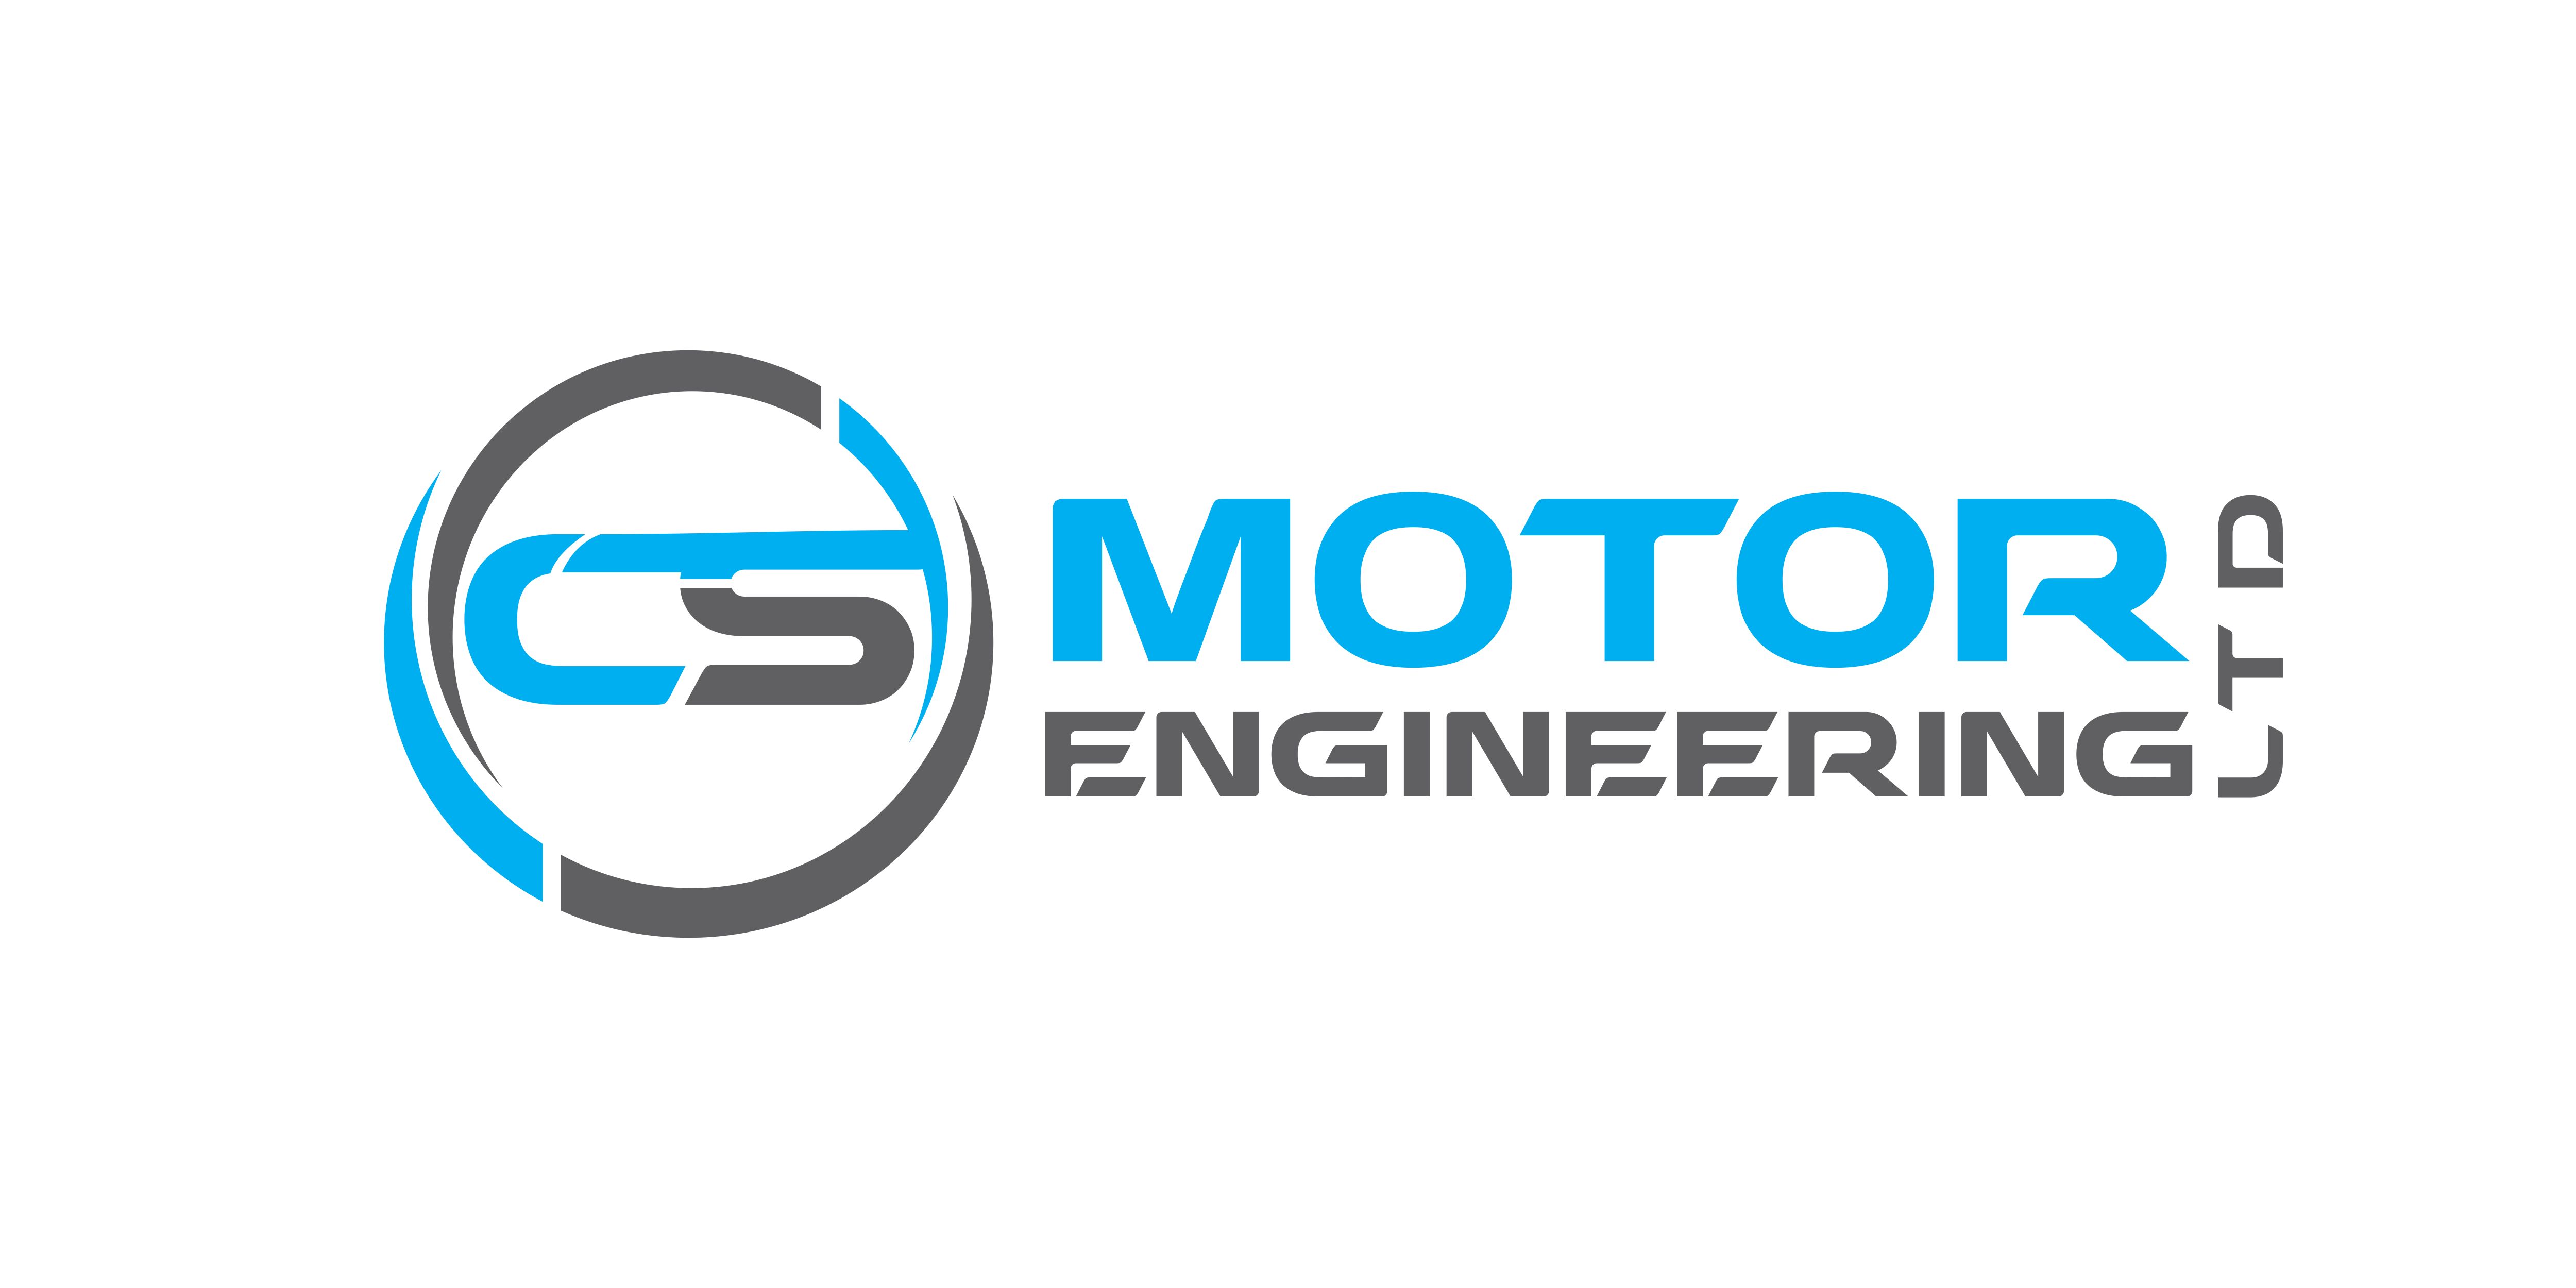 CS Motor Engineering Ltd